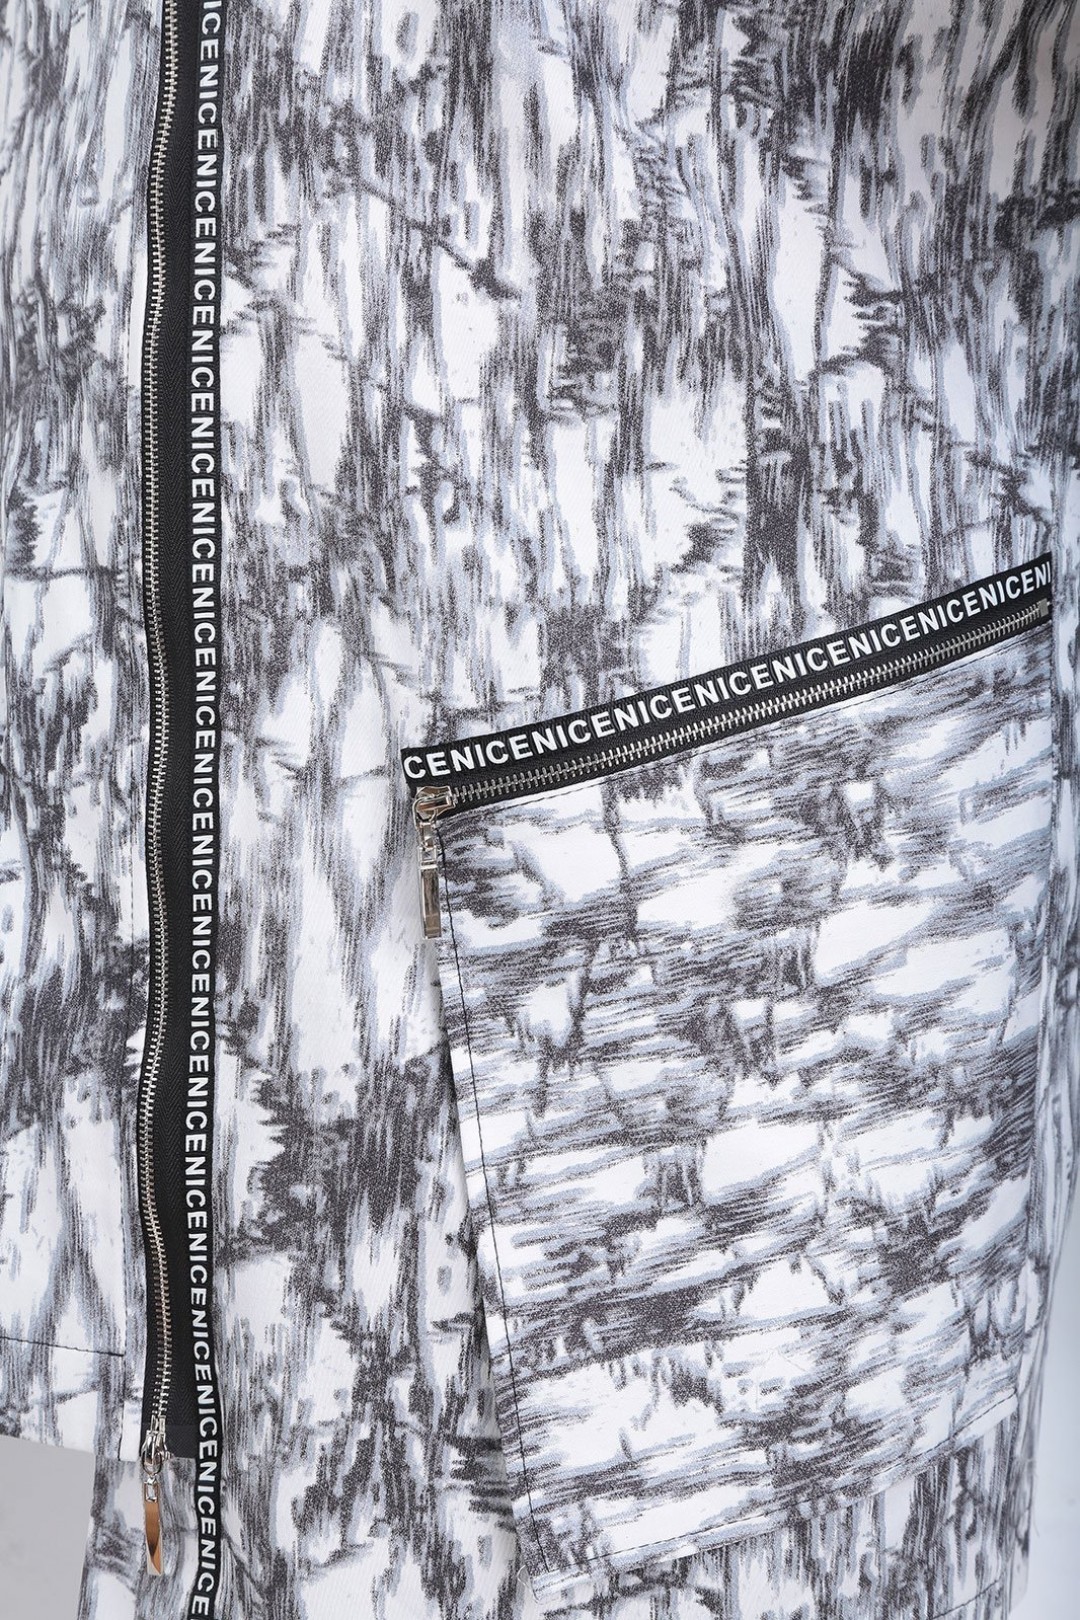 Куртка Milana М-950 белый+серый